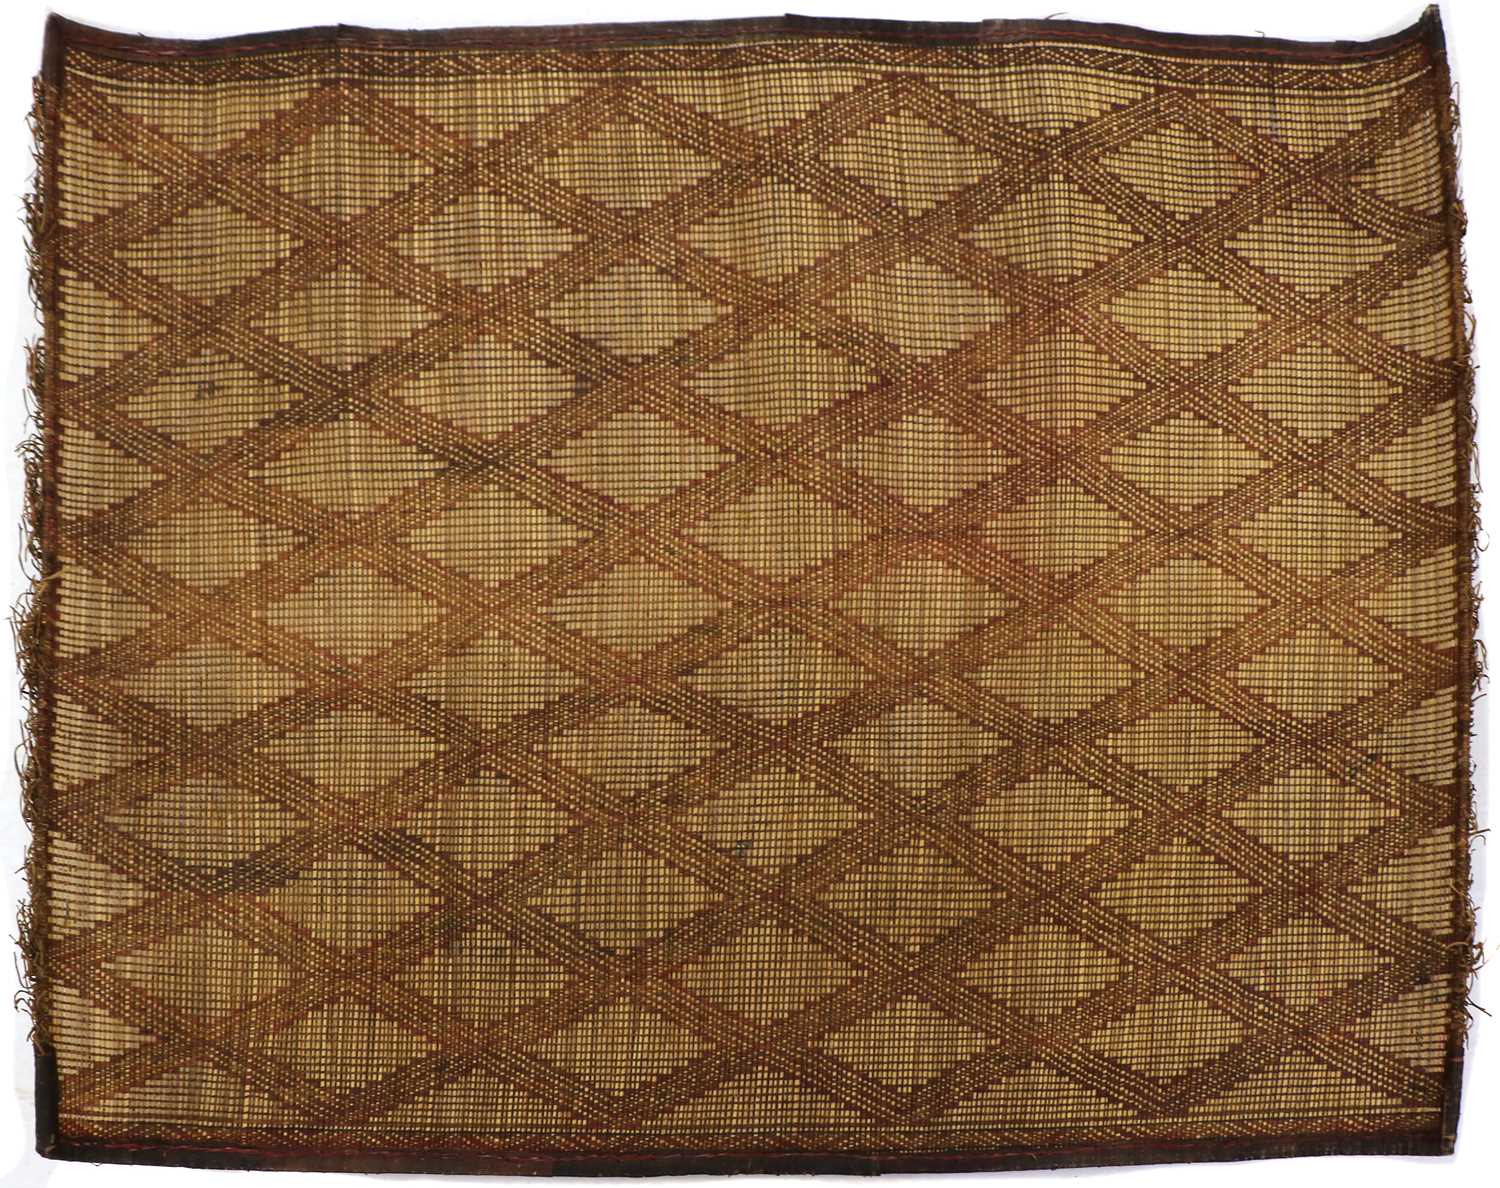 A Tuareg straw mat,